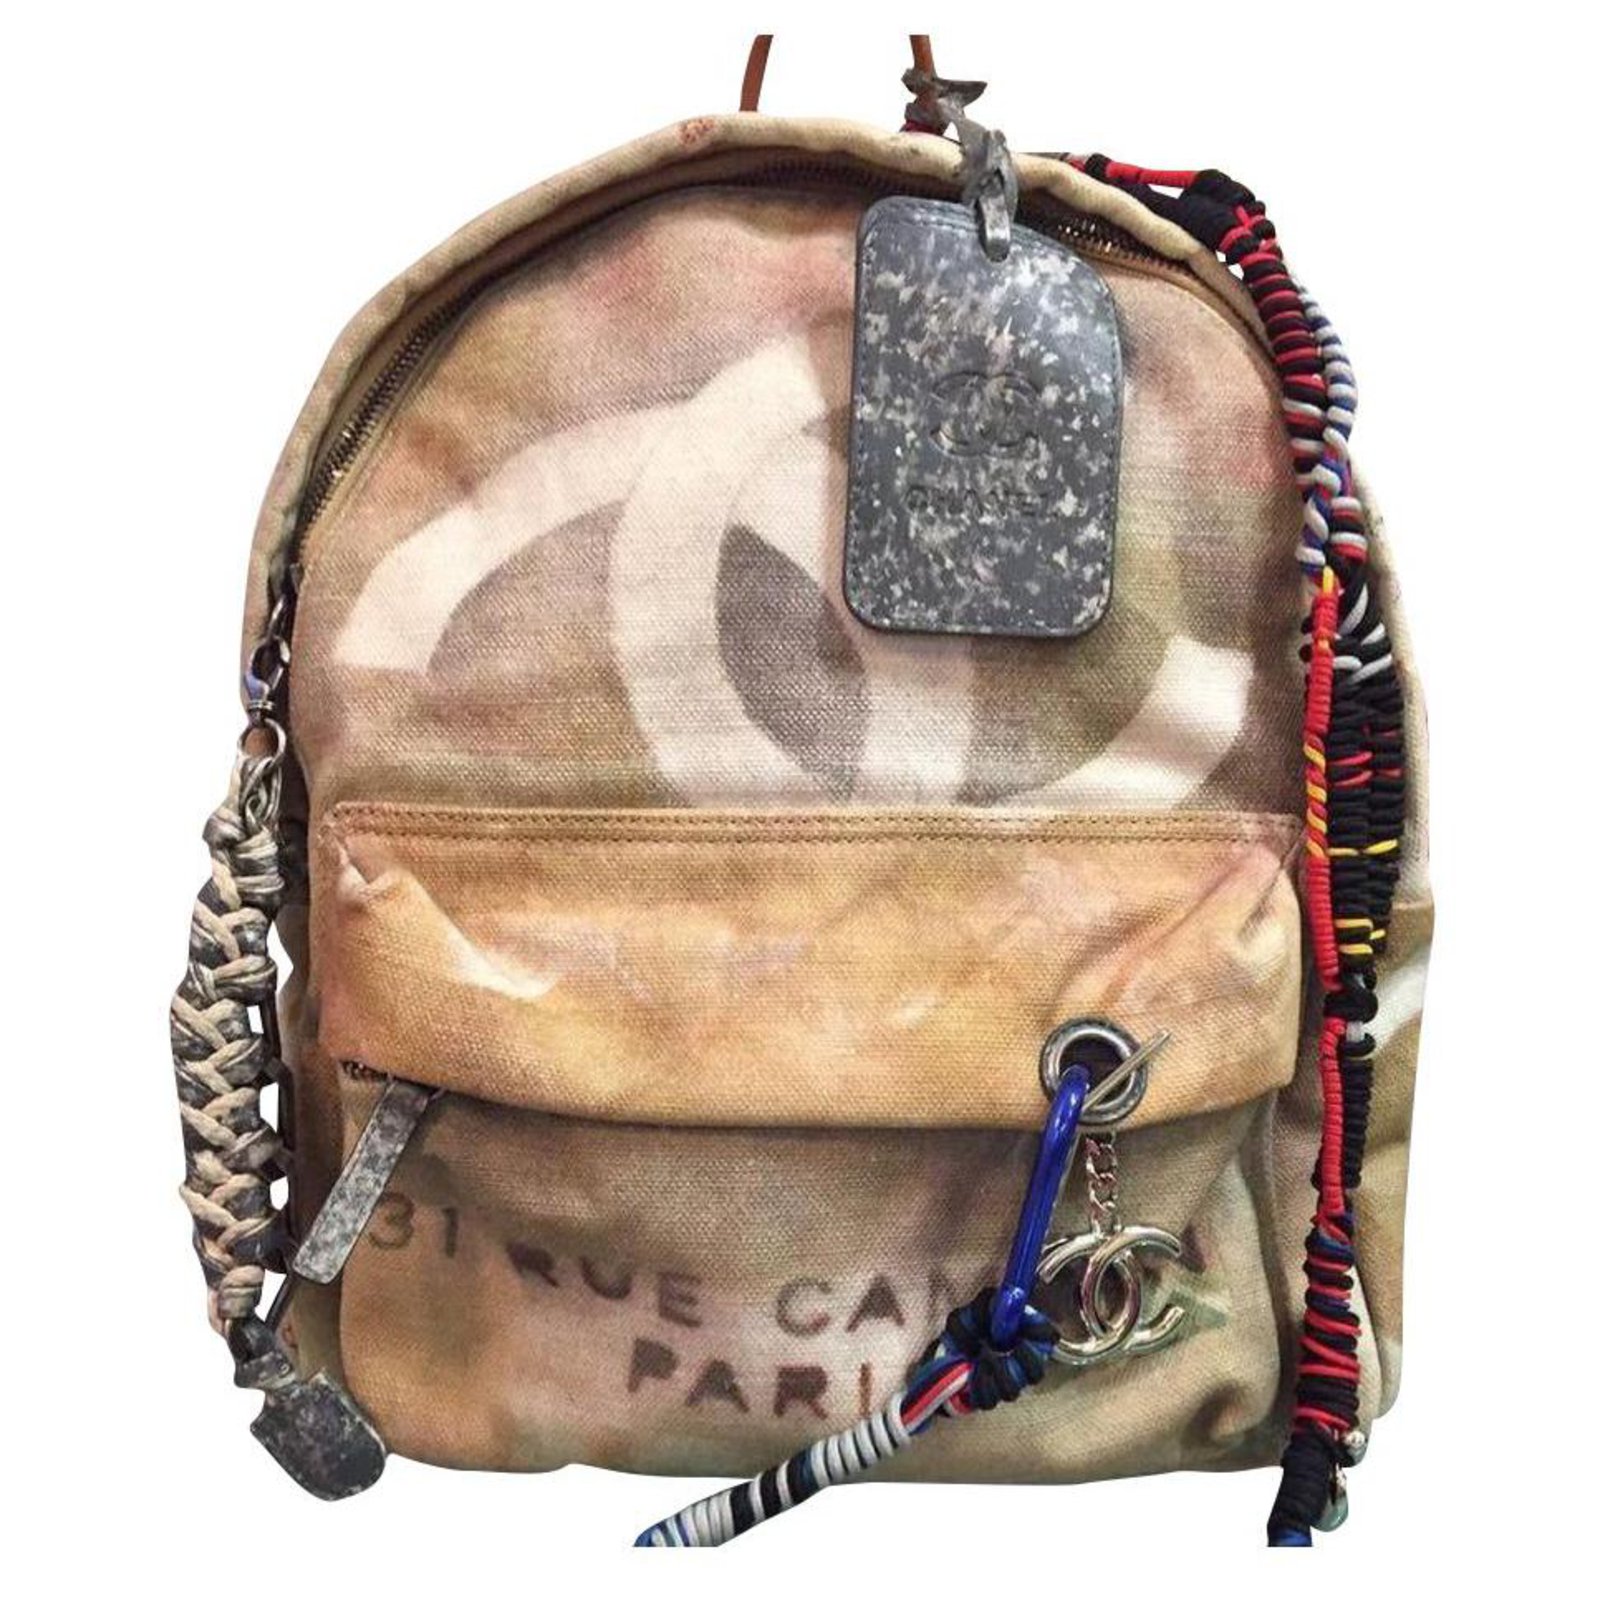 ANTHENTIC CHANEL Vintage Small DUMA Backpack Beige RARE COLOR